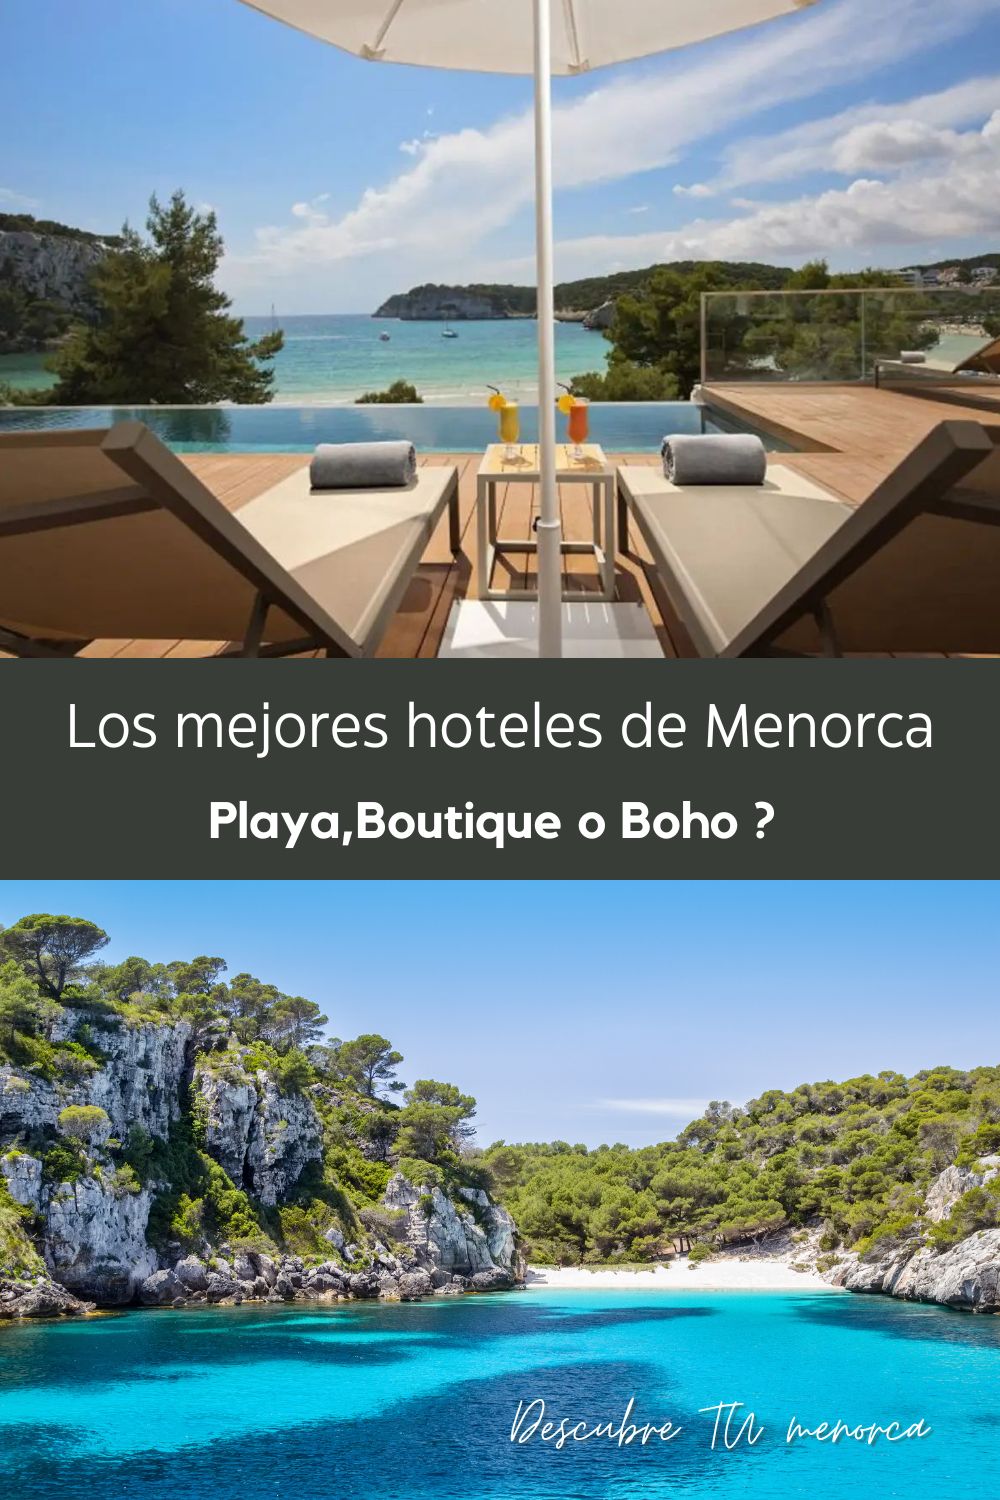 Menorca's best Hotels